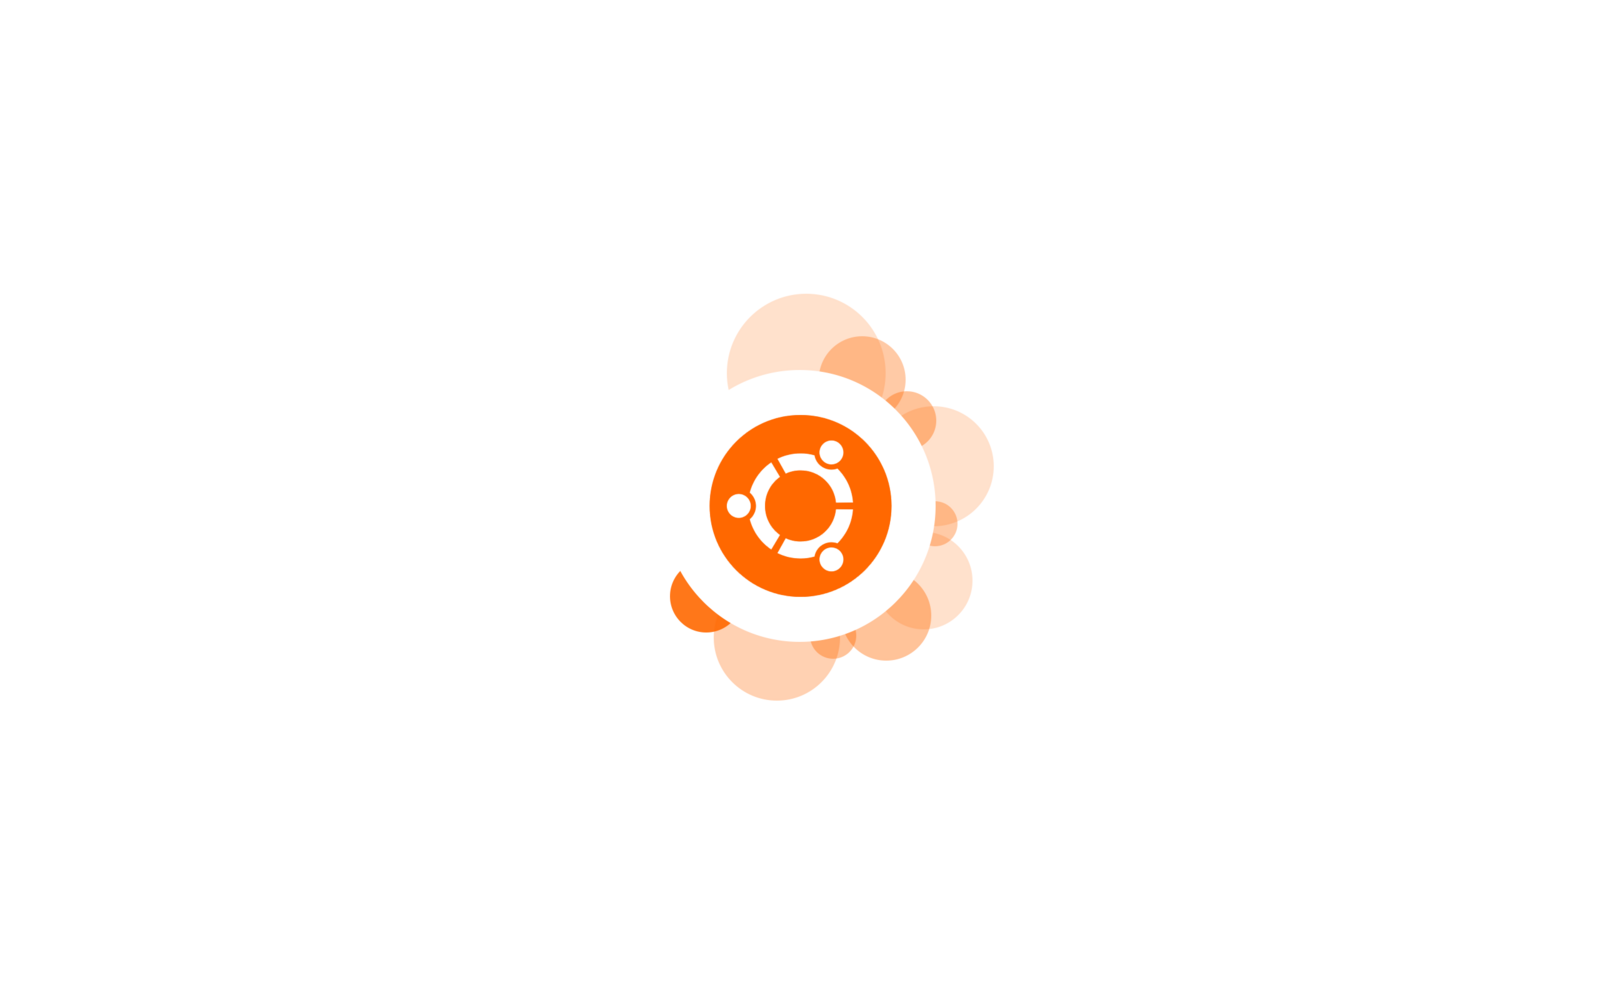 Бесплатное фото Логотип Ubuntu на белом фоне